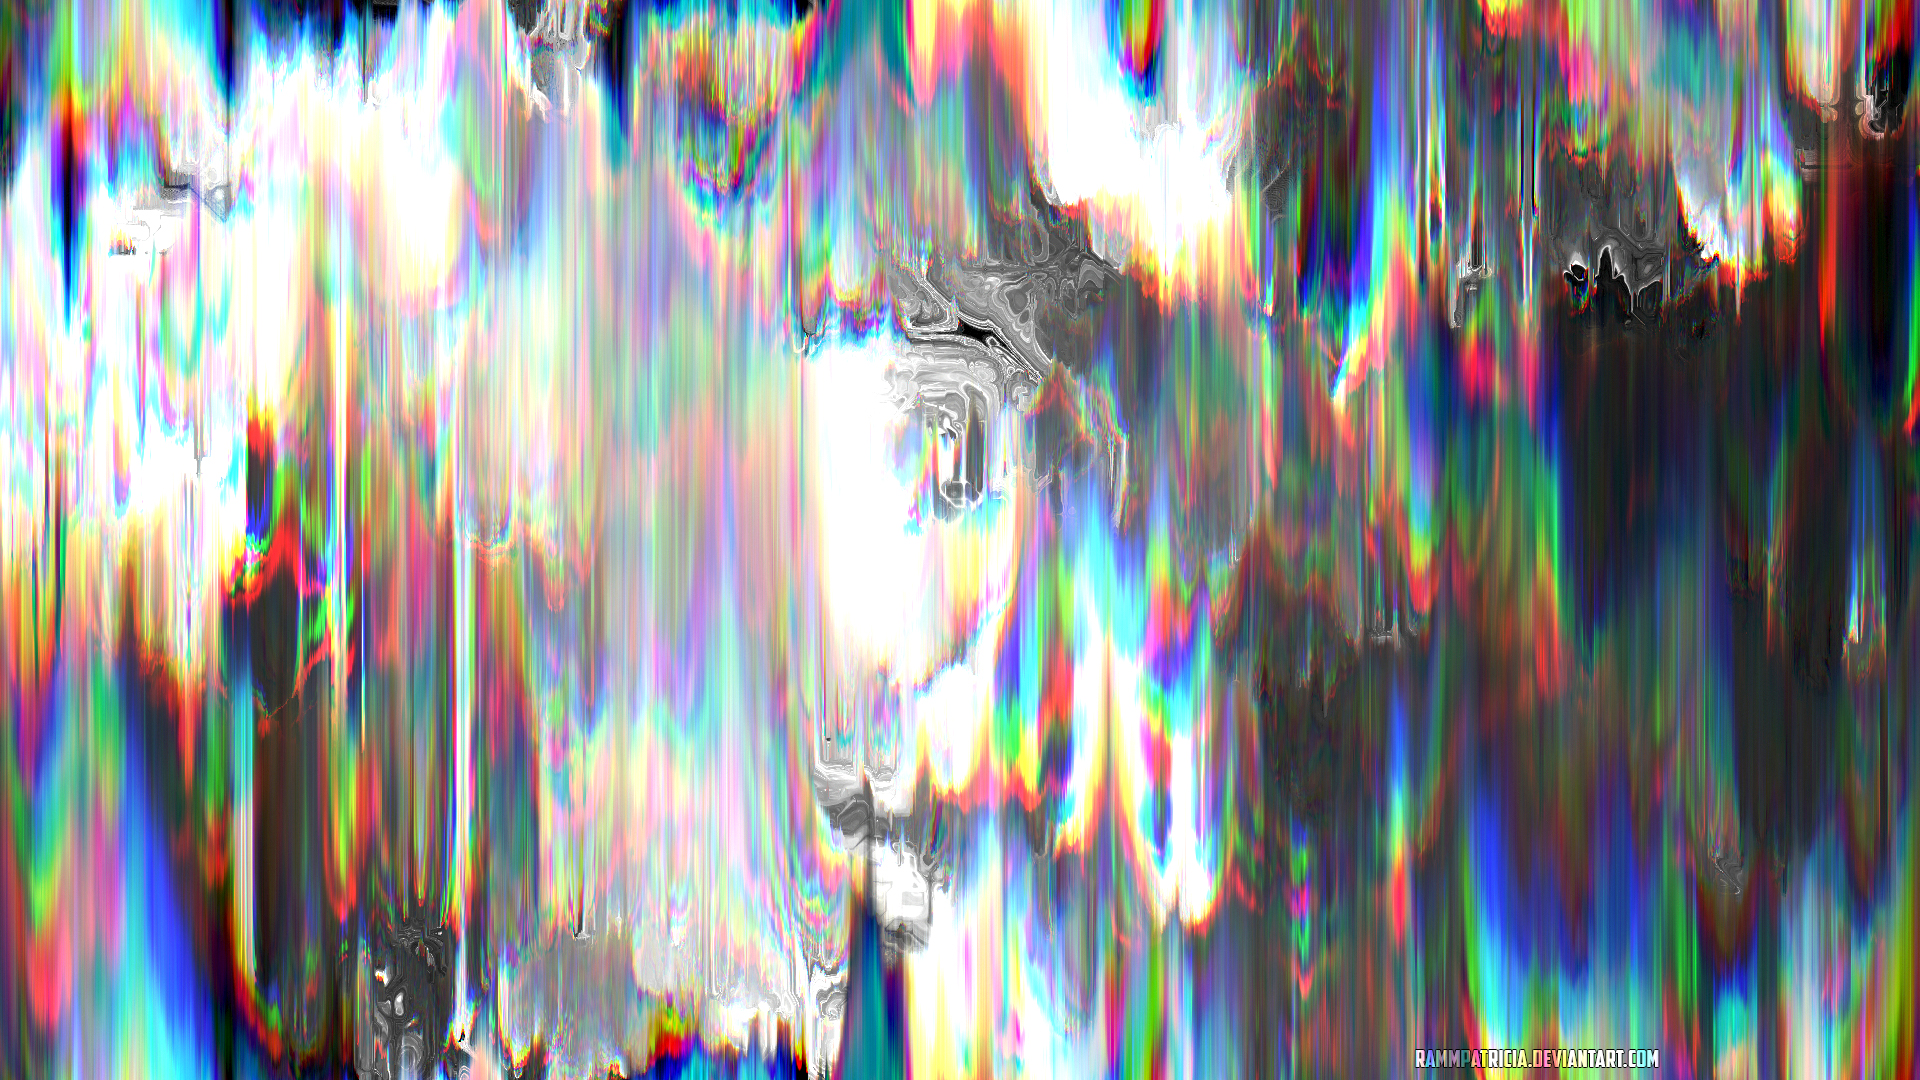 RammPatricia Digital Art Abstract Digital Colorful Iridescent Metal Reflection Glitch Art 1920x1080